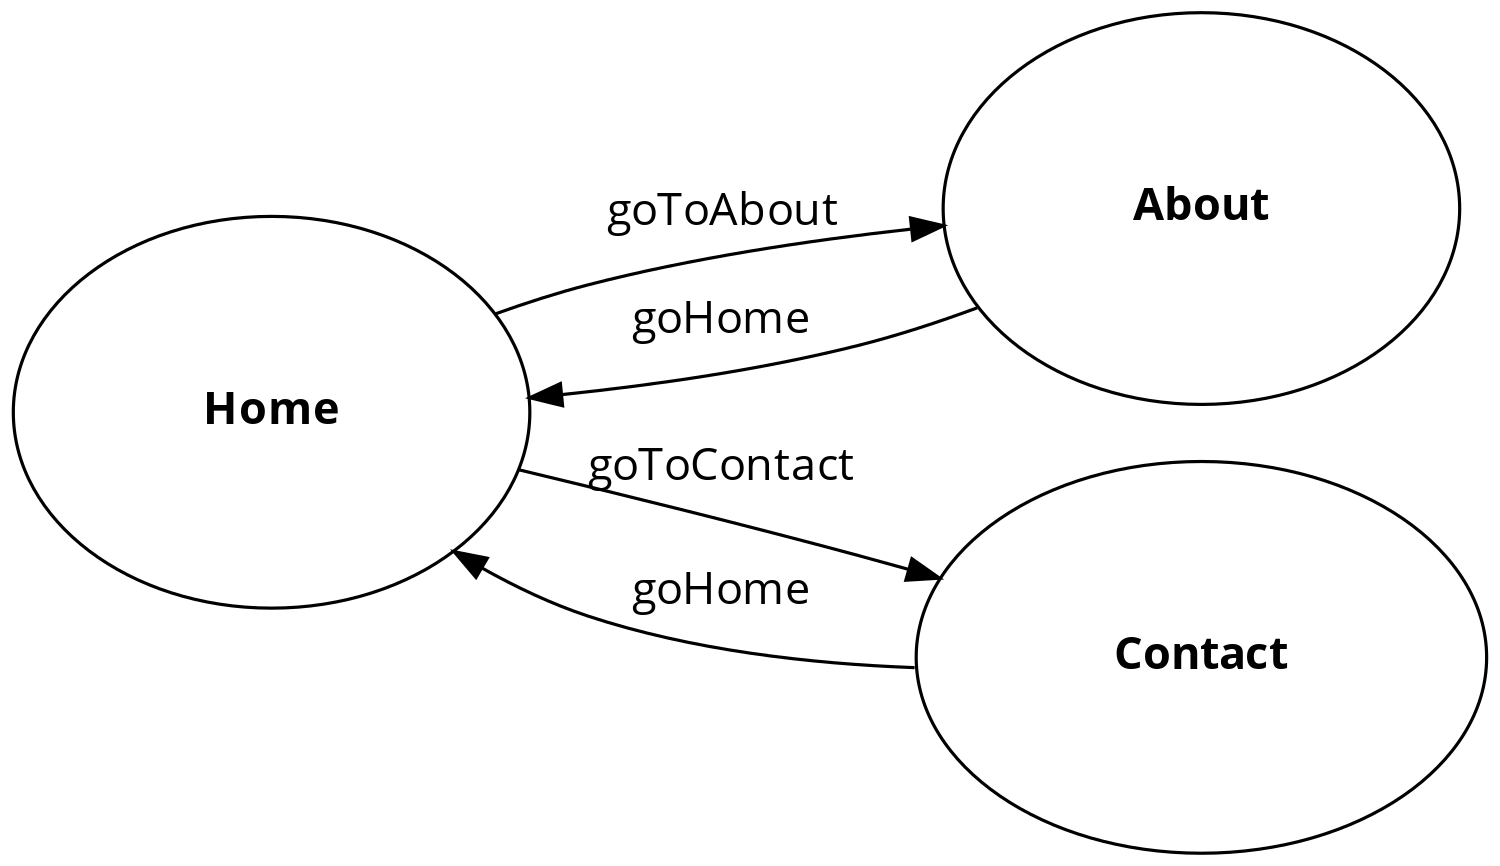 digraph foo {
  graph [ dpi = 300 ];
  splines=true;
  esep=10;
  size="5";
  rankdir=LR;
  edge [ fontname = "Open Sans" ];
  node [ fontname = "Open Sans Bold", margin = "0.5,0.5" ];

  Home -> About [ label = "goToAbout" ];
  Home -> Contact [ label = "goToContact" ];
  About -> Home [ label = "goHome" ];
  Contact -> Home [ label = "goHome" ];
}